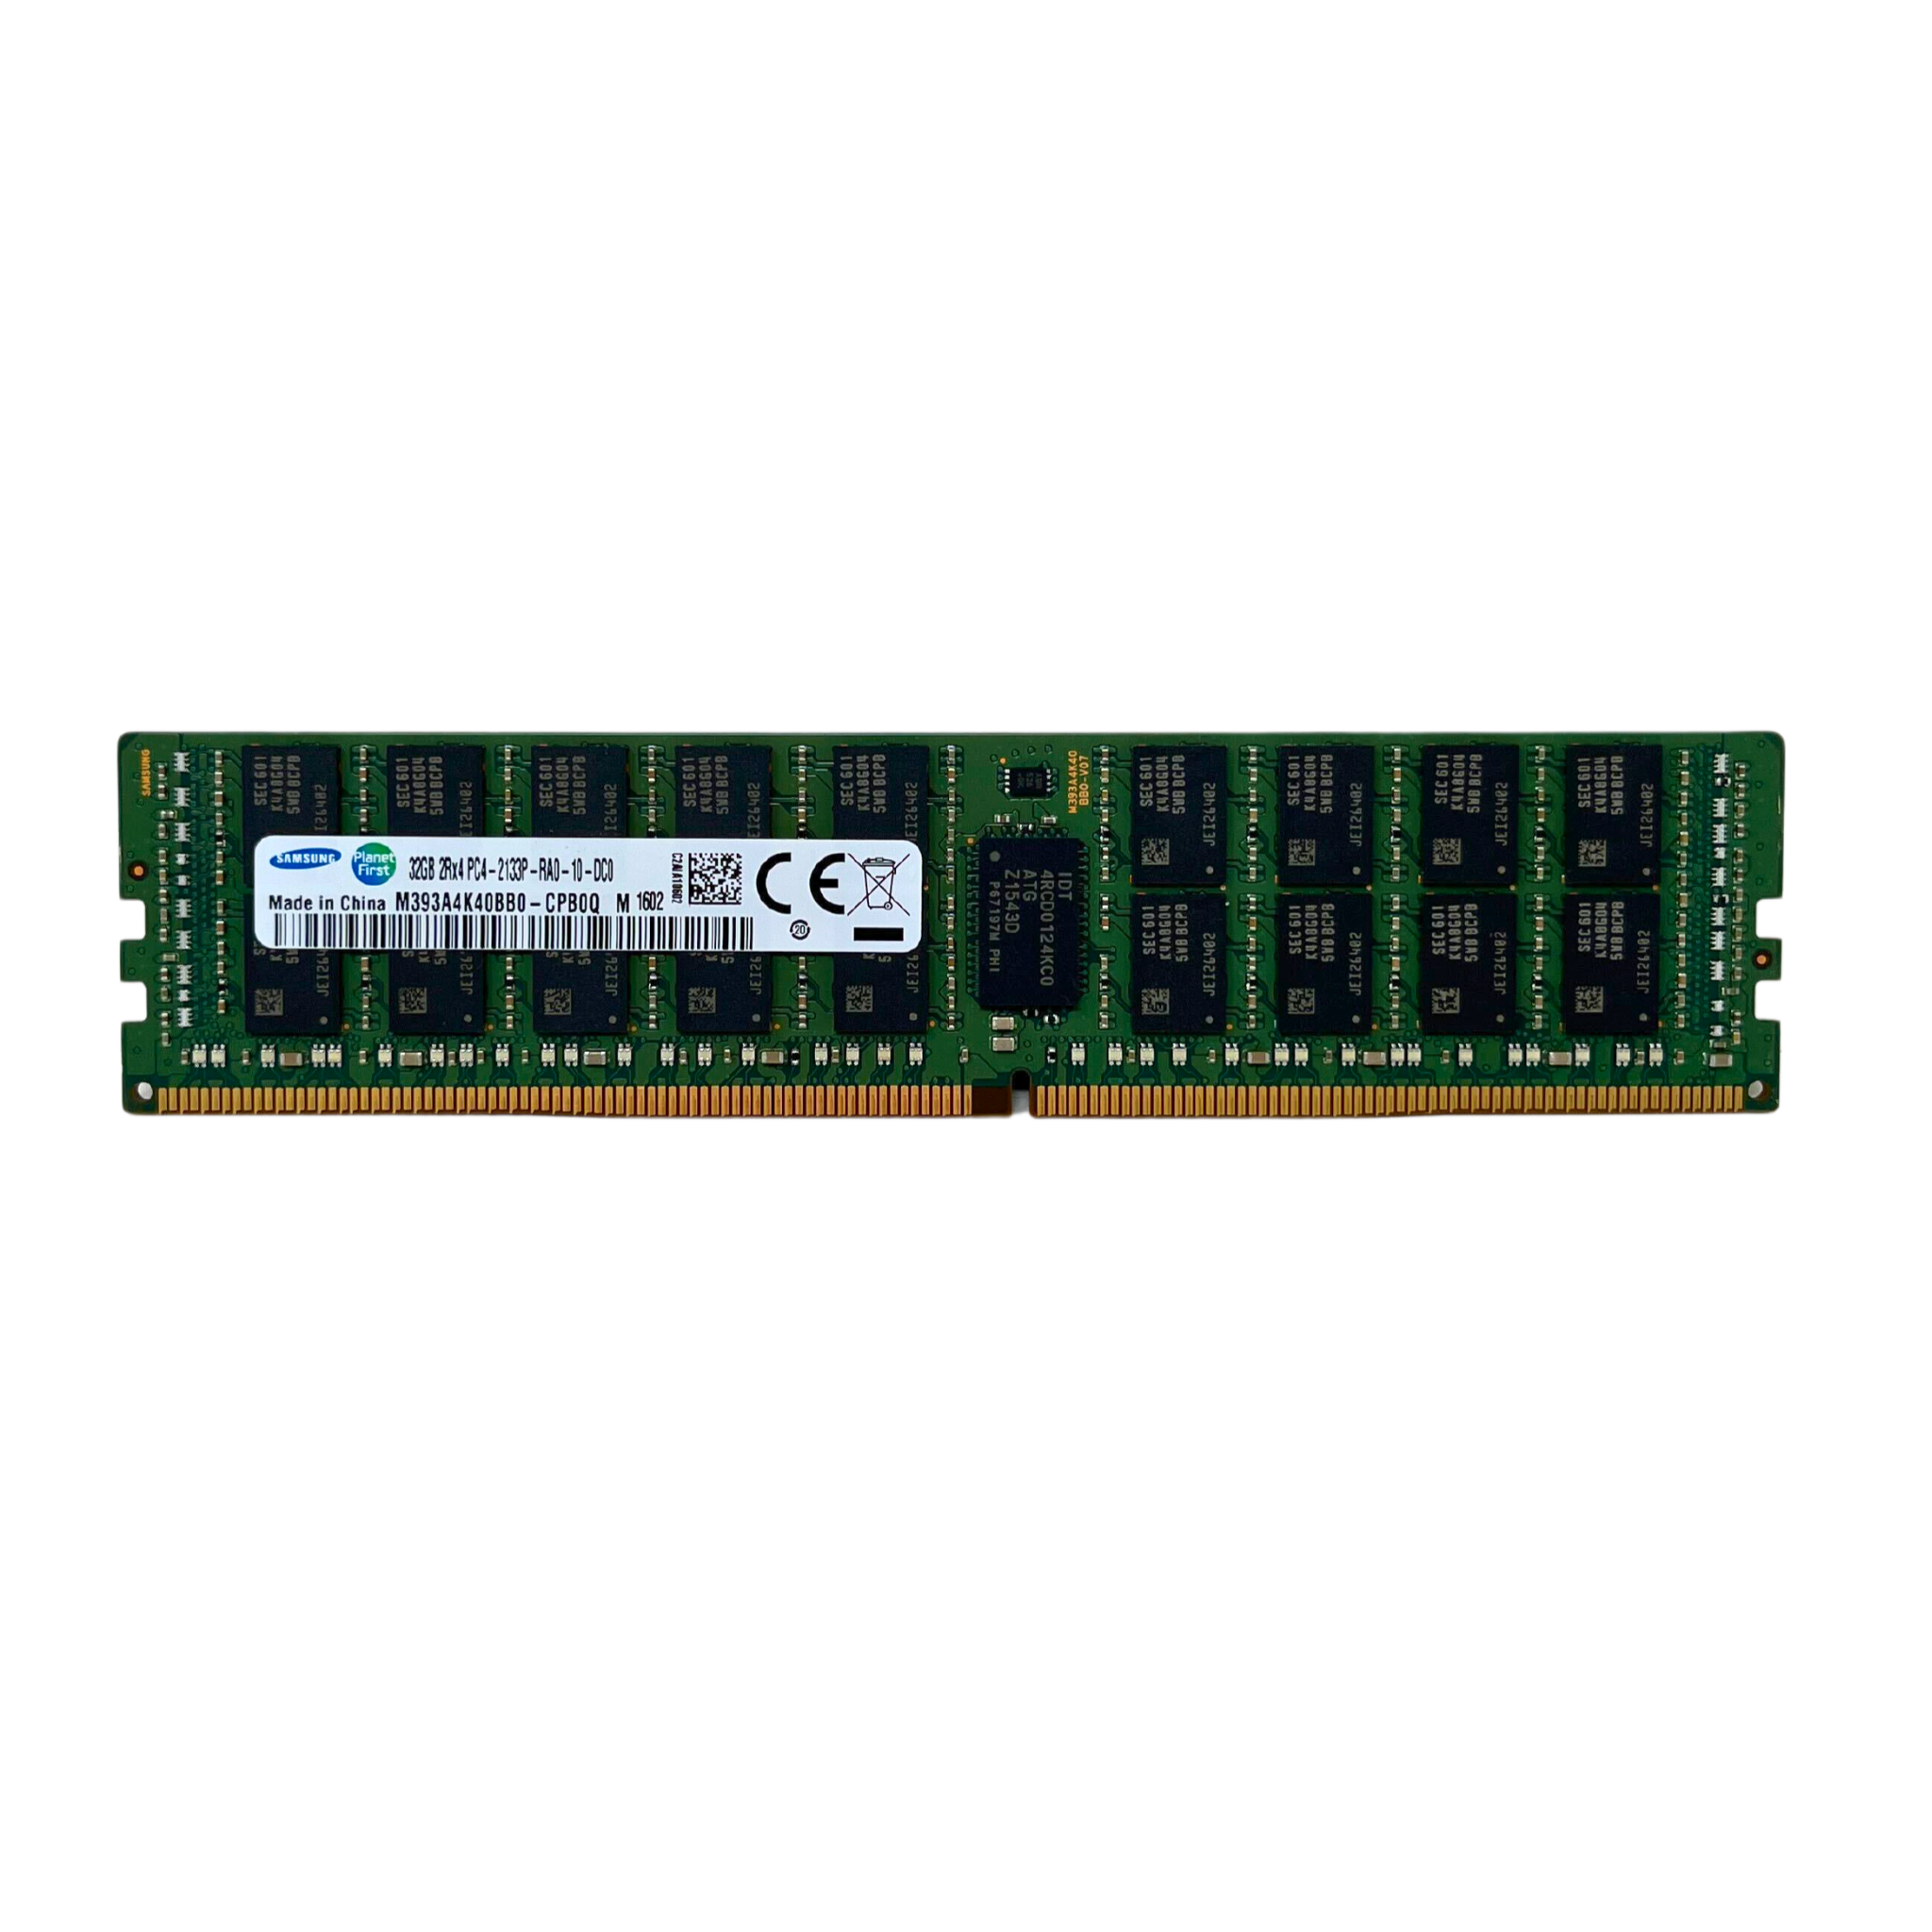 Samsung 32GB 2Rx4 PC4-2133P DDR4 ECC Registered Memory (M386A4G40DM0-CPB - Samsung)